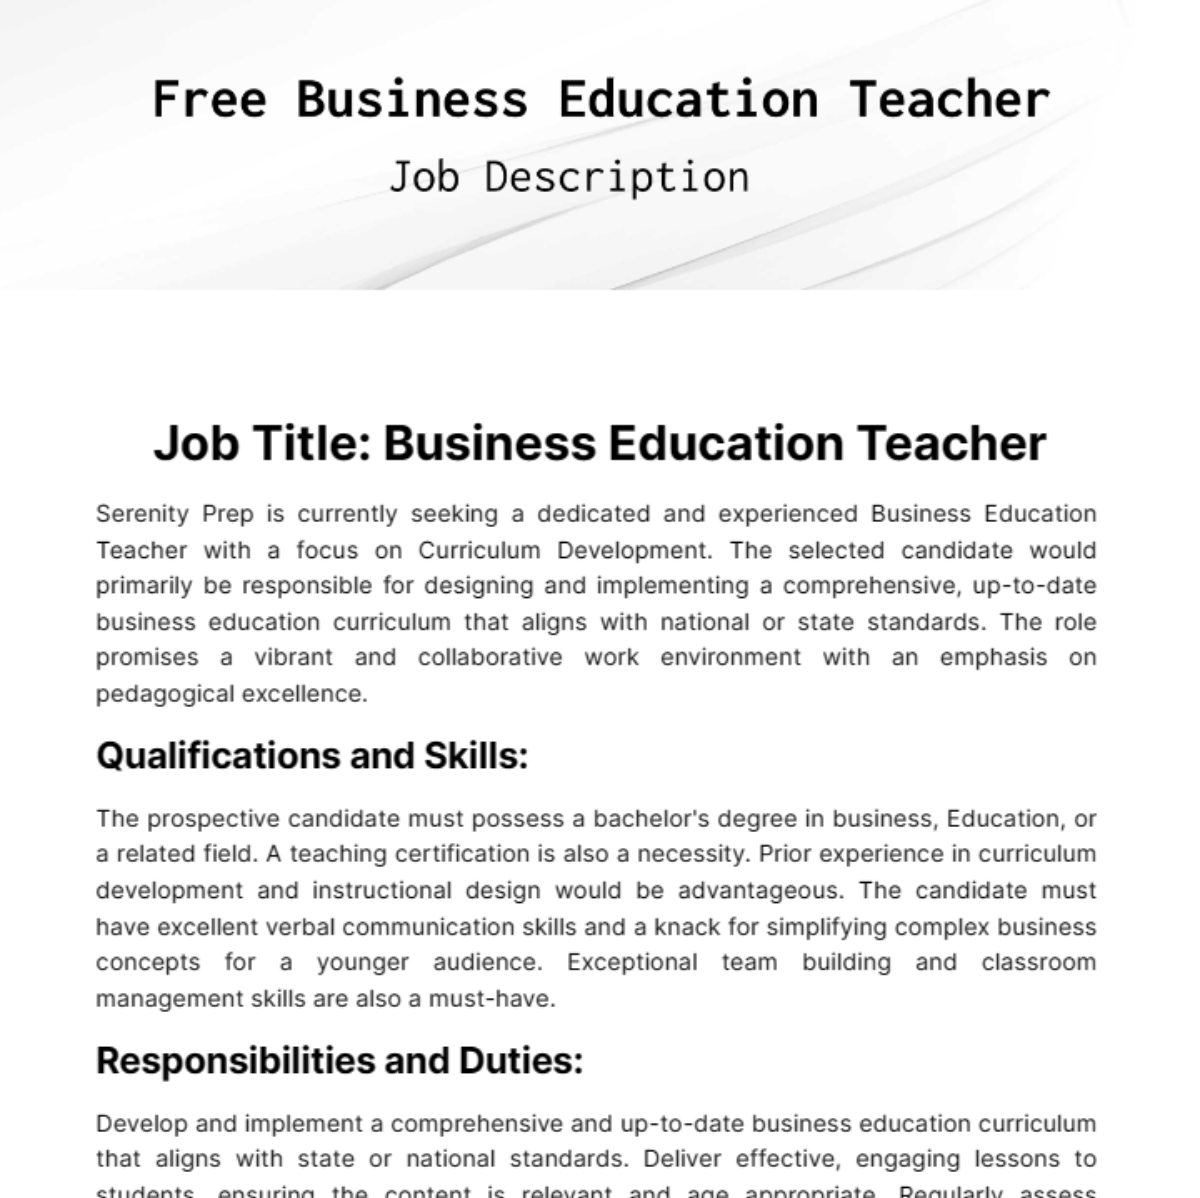 Free Business Education Teacher Job Description Template